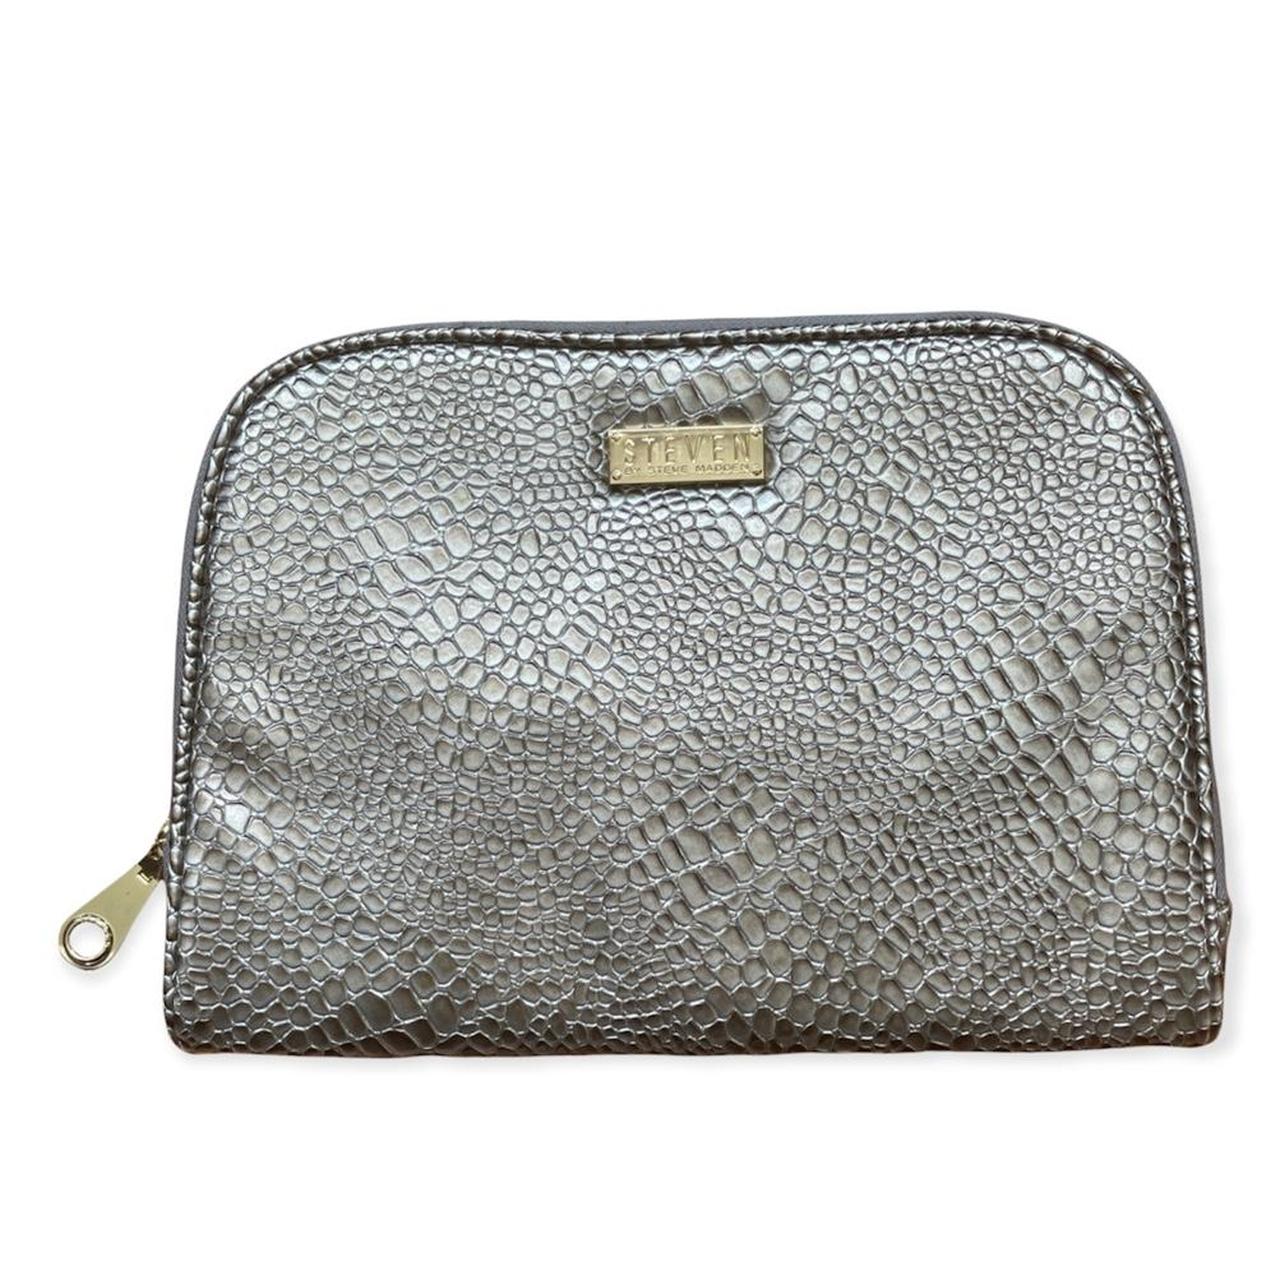 Buy Gold Handbags for Women by STEVE MADDEN Online | Ajio.com